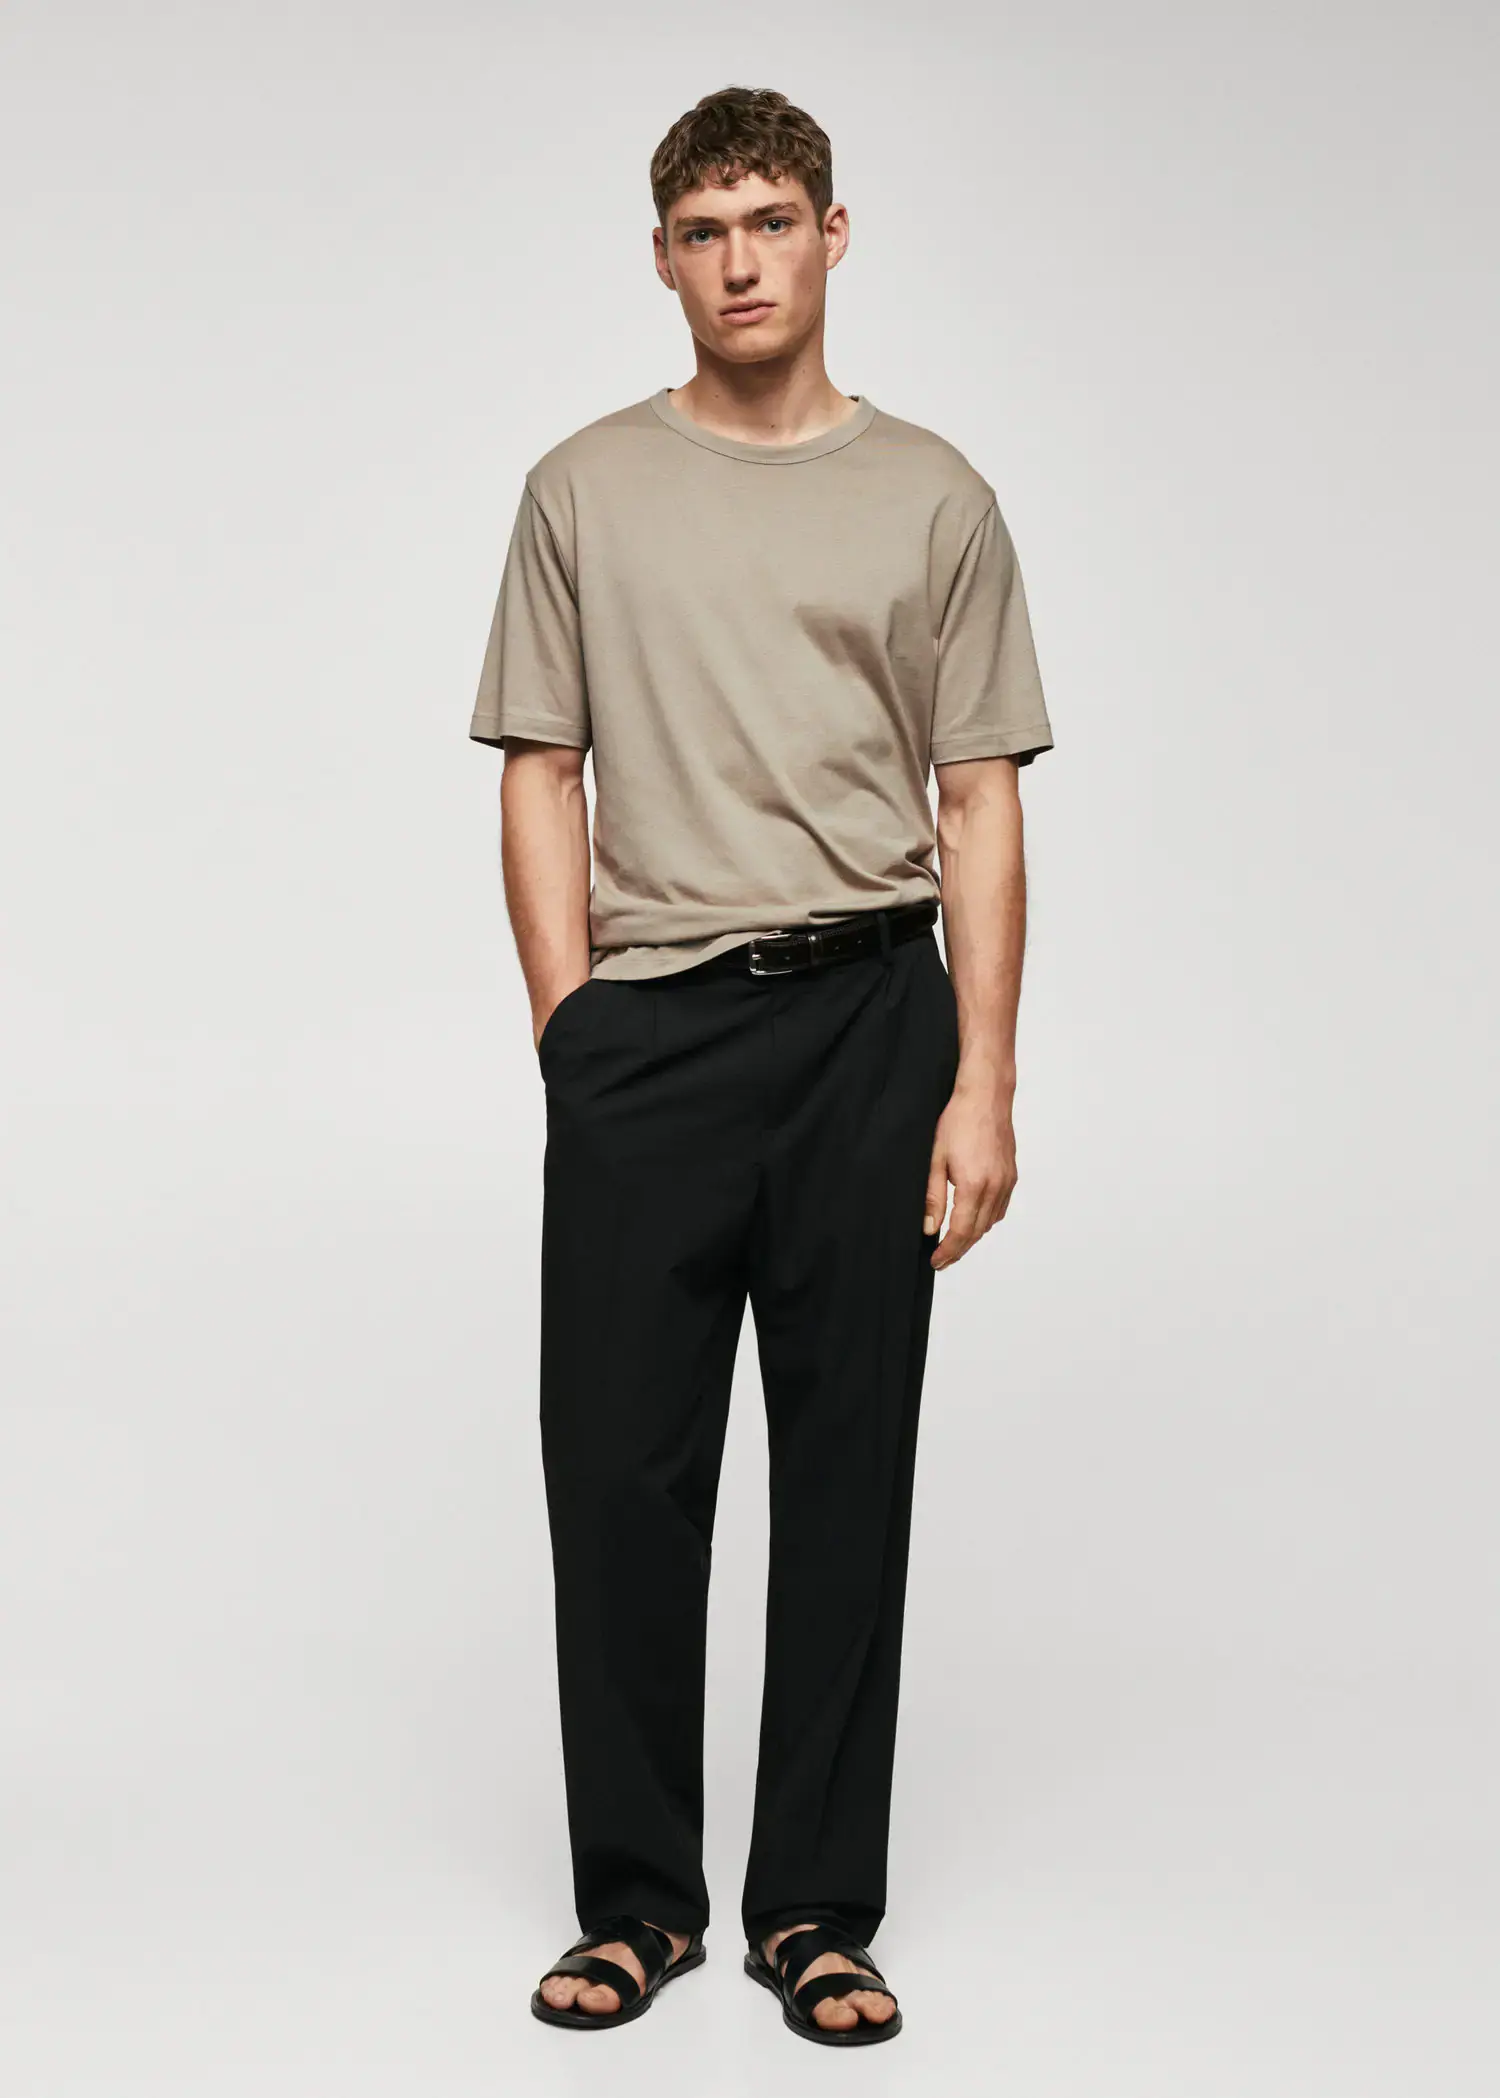 Mango Basic mercerized lightweight shirt. a man in a tan t-shirt and black pants. 